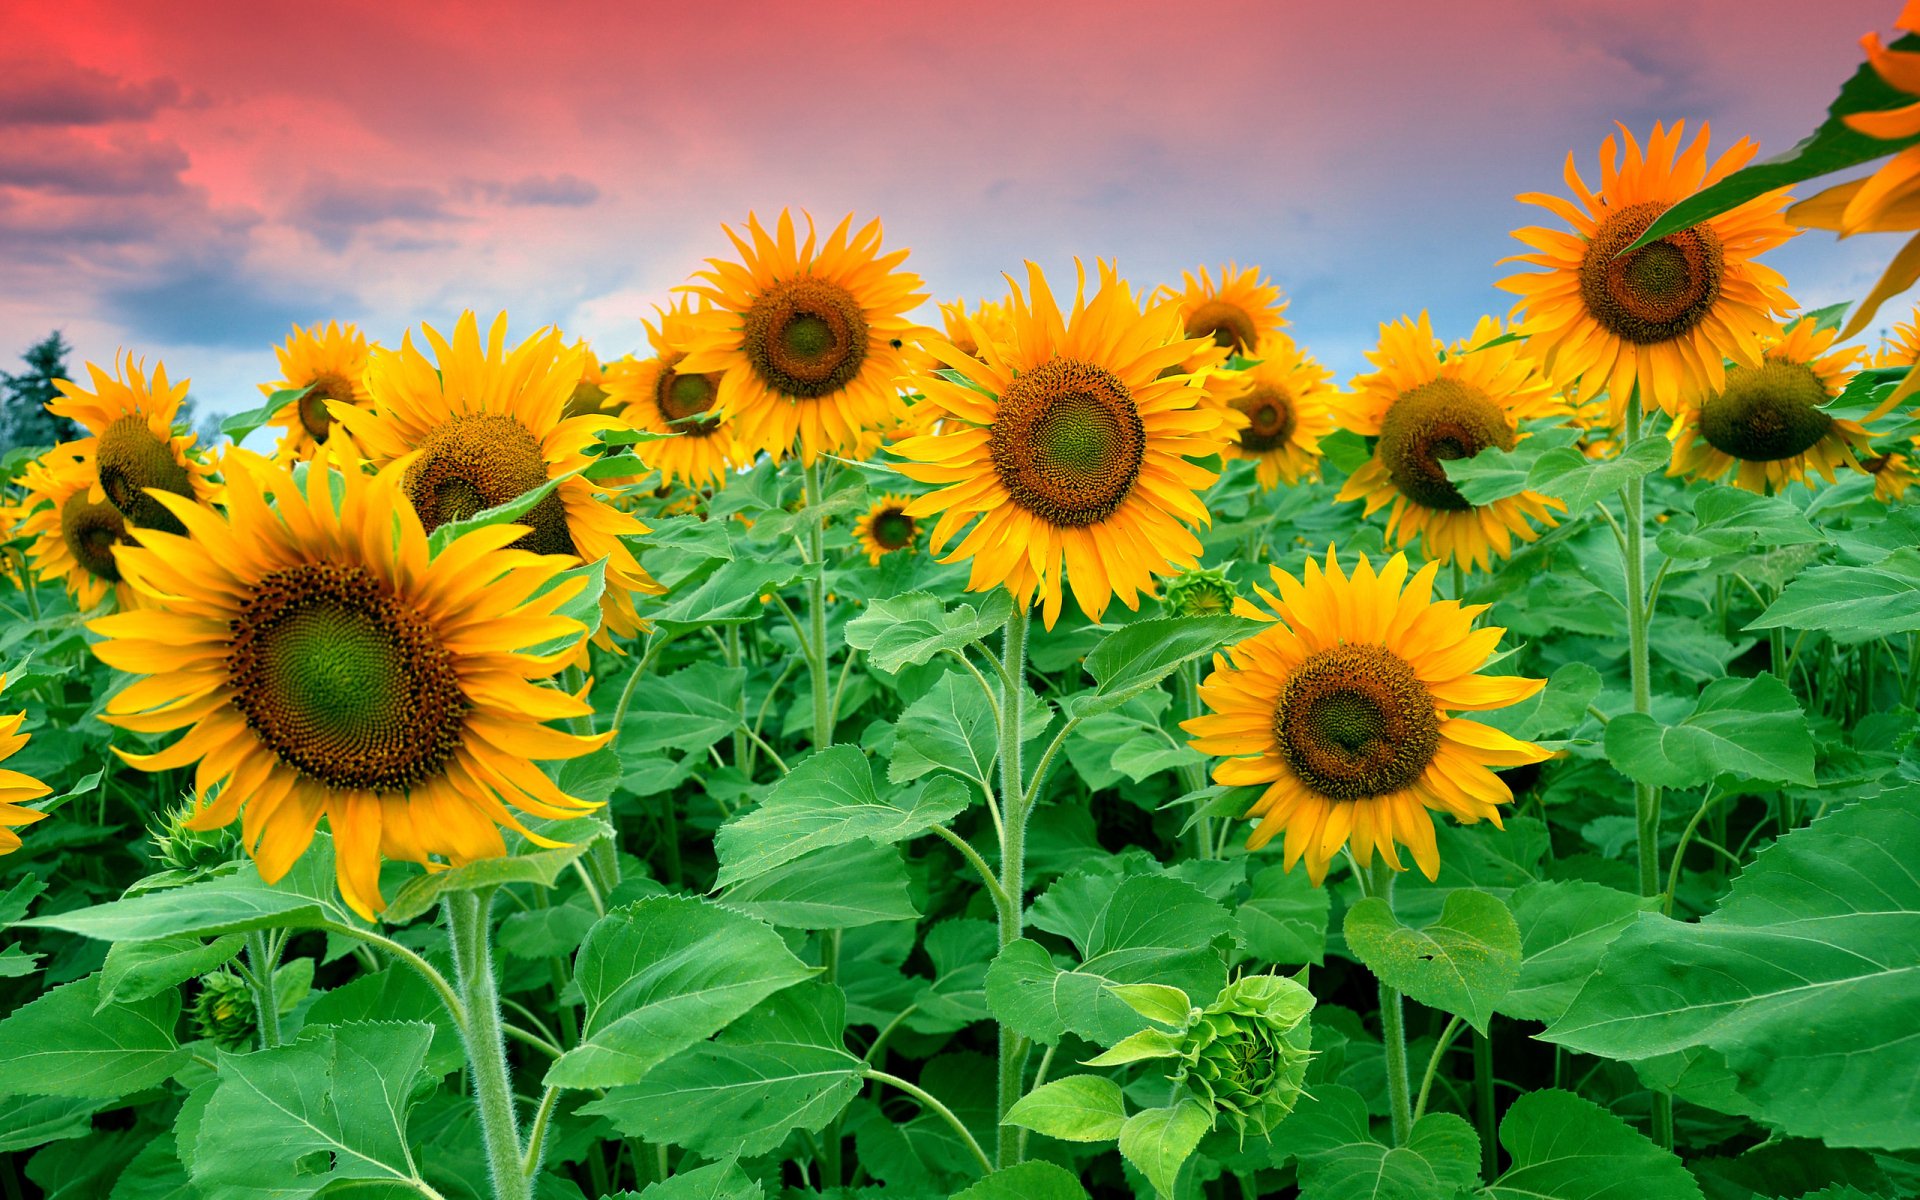  Sunflower  HD Wallpaper Background Image 2560x1600 ID 